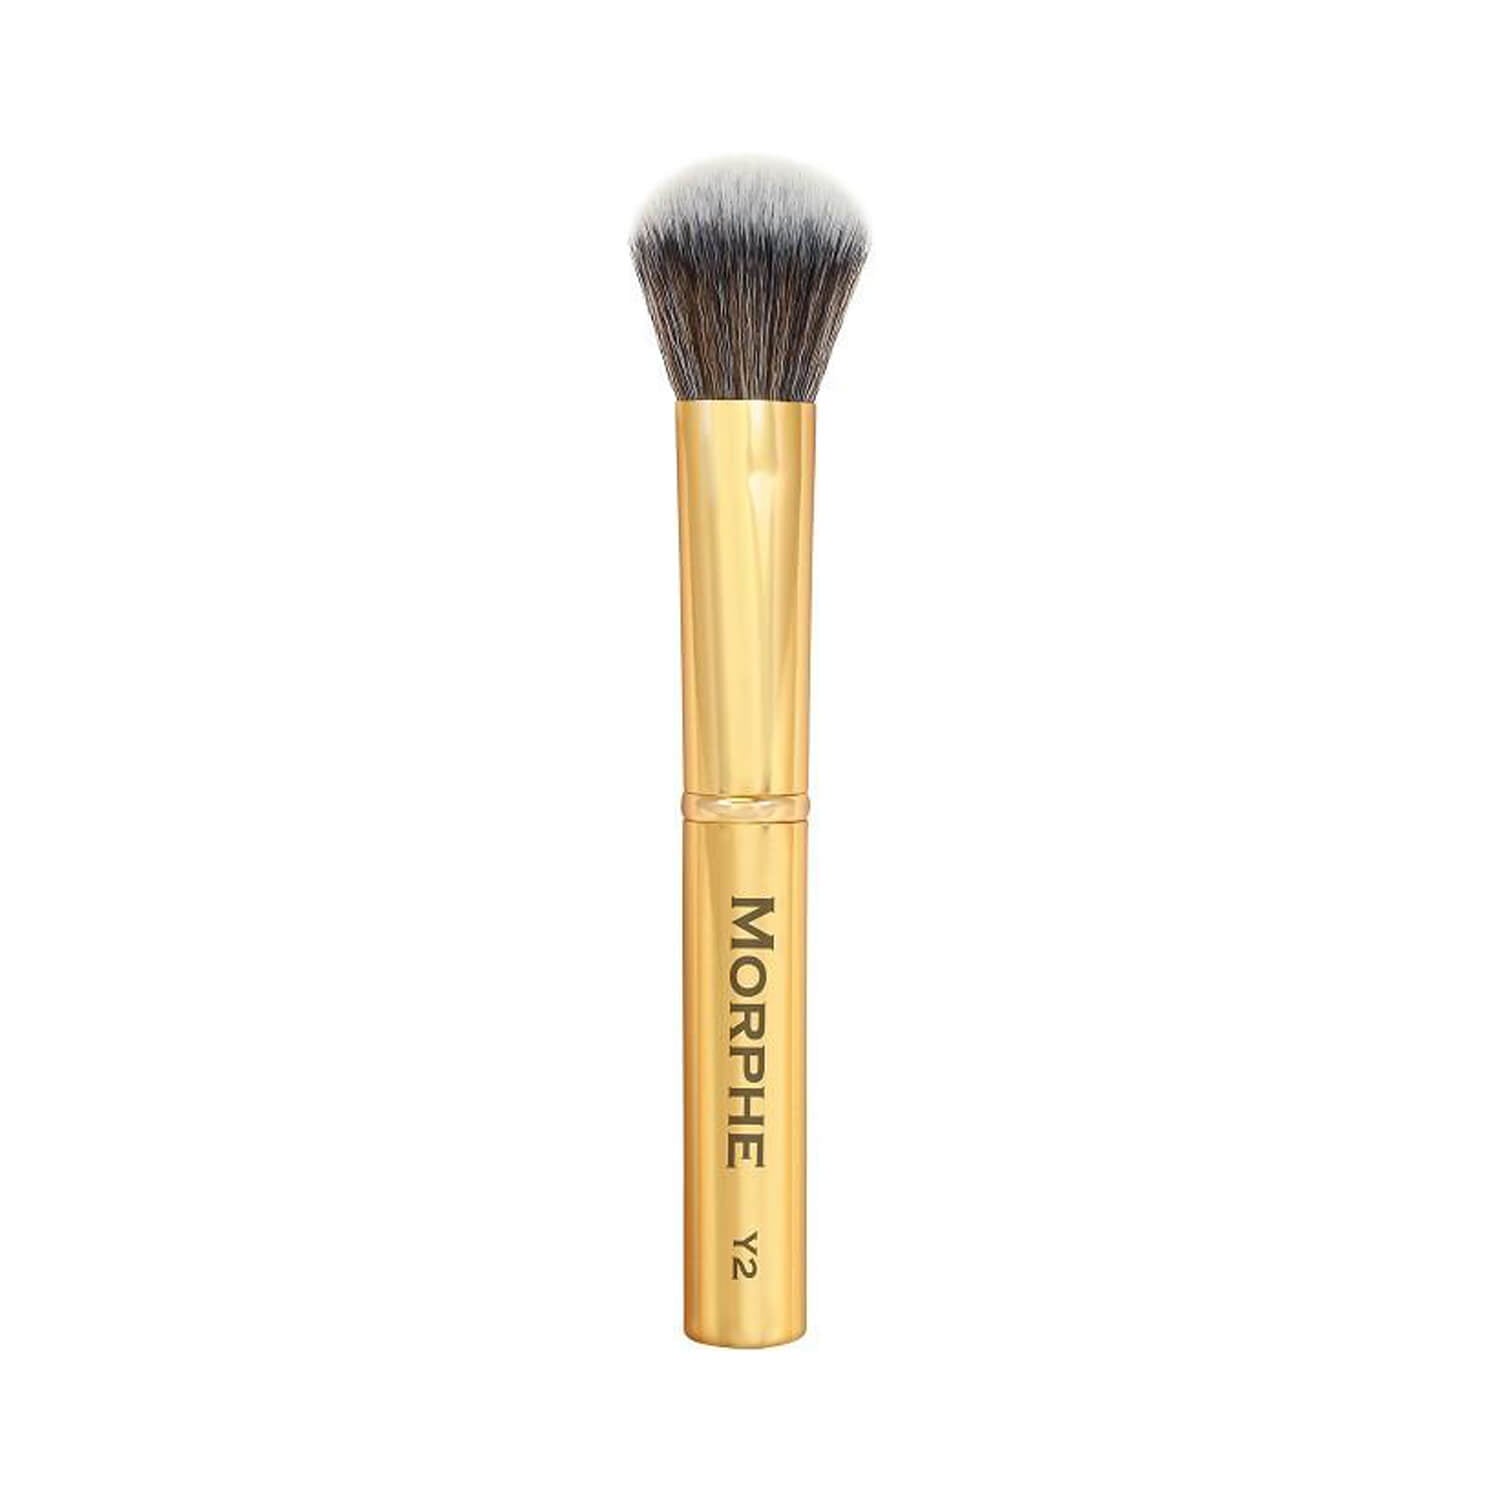 Morphe Cosmetics Y2 Tapered Powder Brush